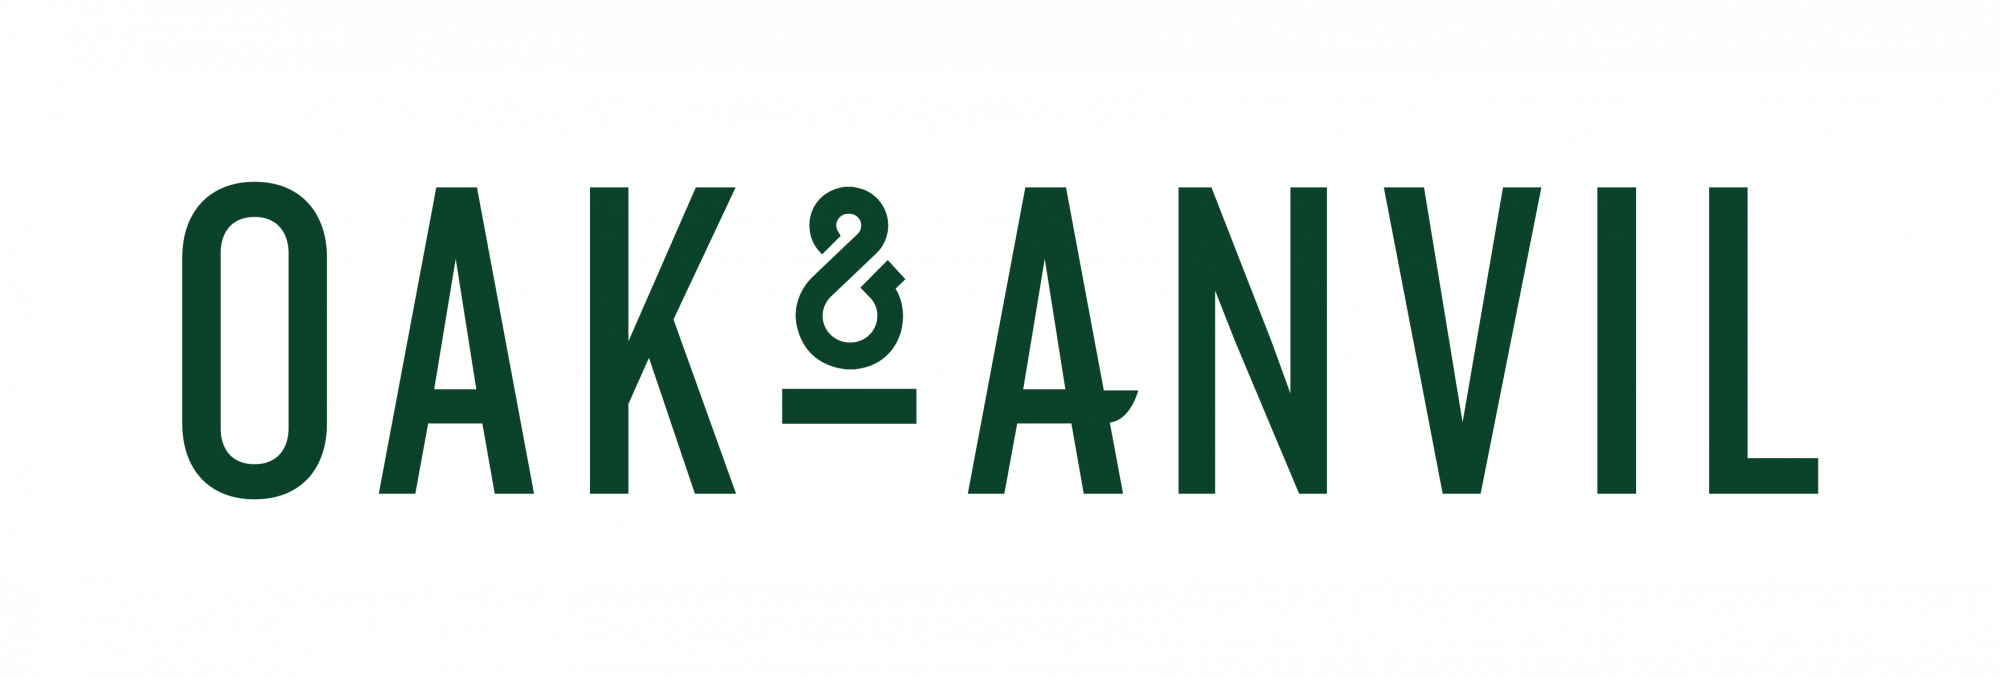 oak anvil brandmark green